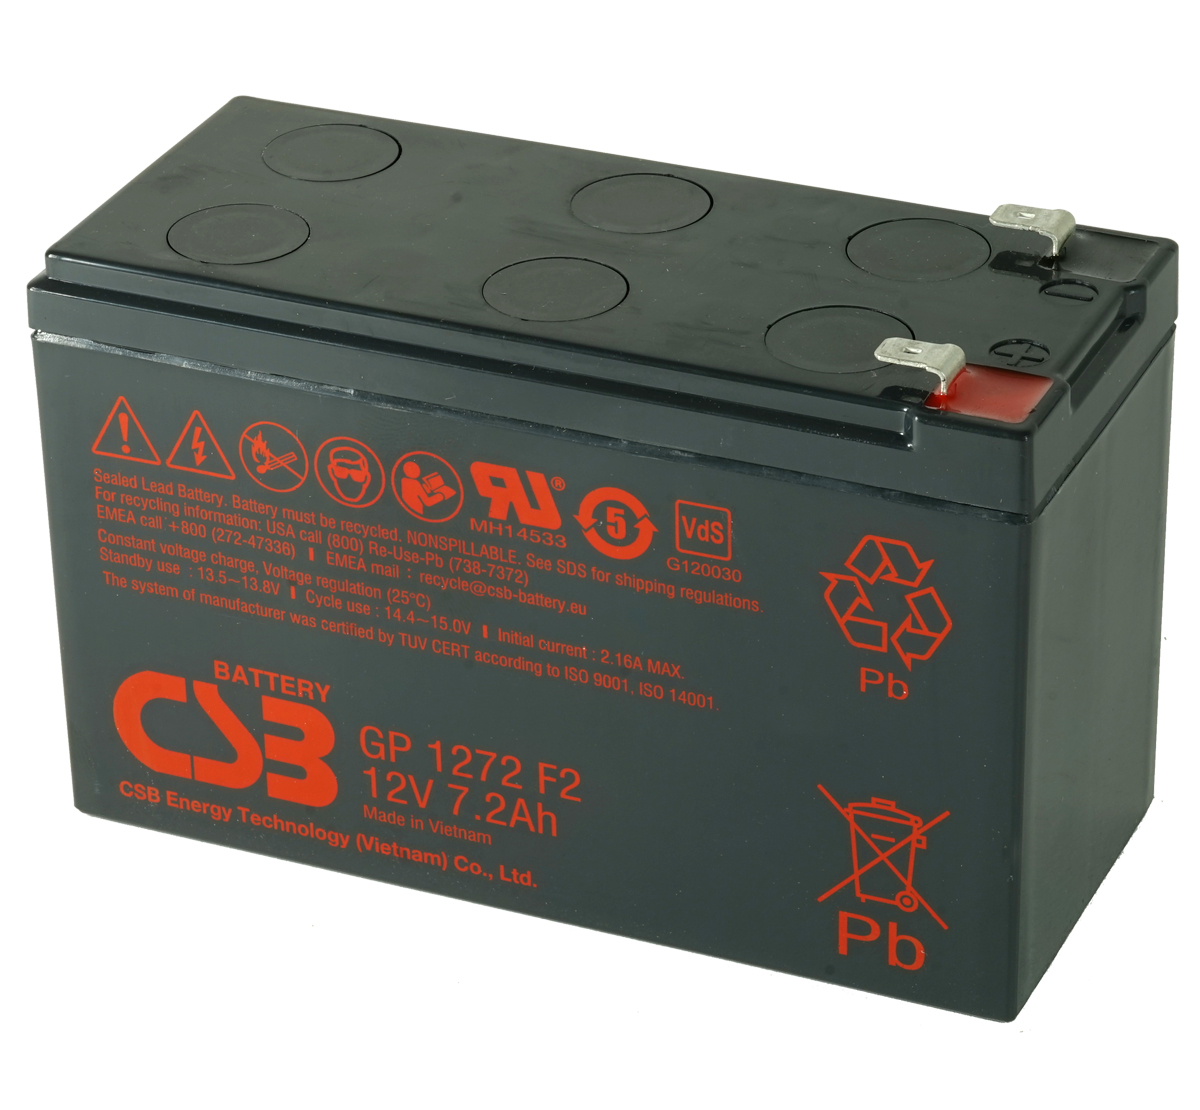 MDS38 UPS Battery Kit - Replaces APC RBC38